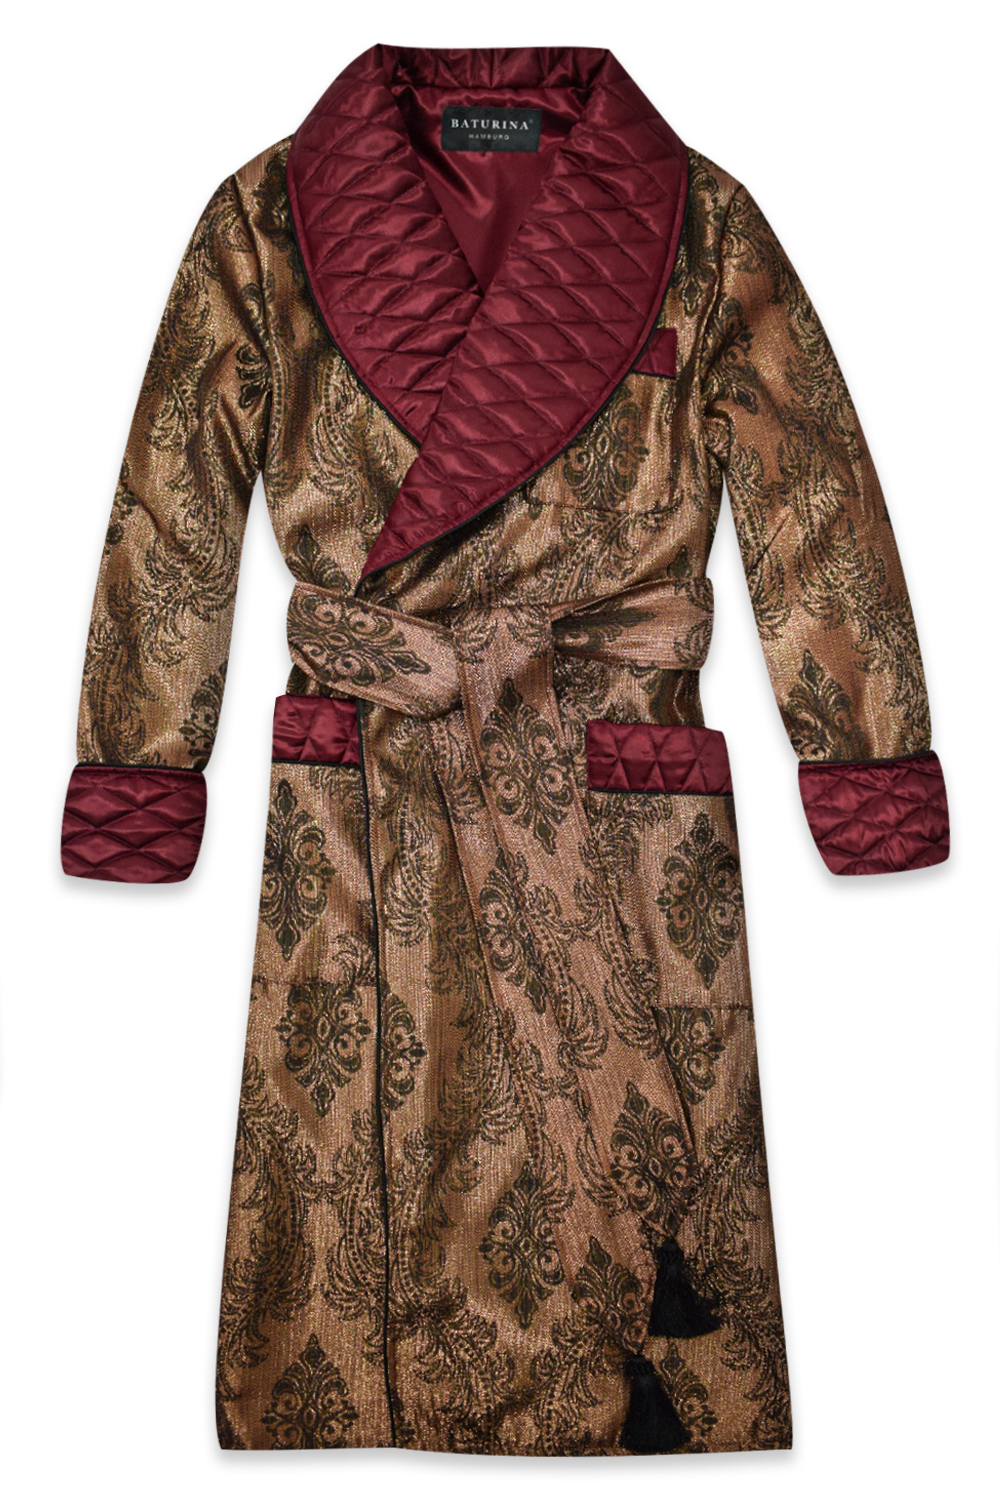 Men's Ice Silk Kimono Dragon Robe Short Sleeve Bathrobe Home Sleepwear 2  Colors | eBay